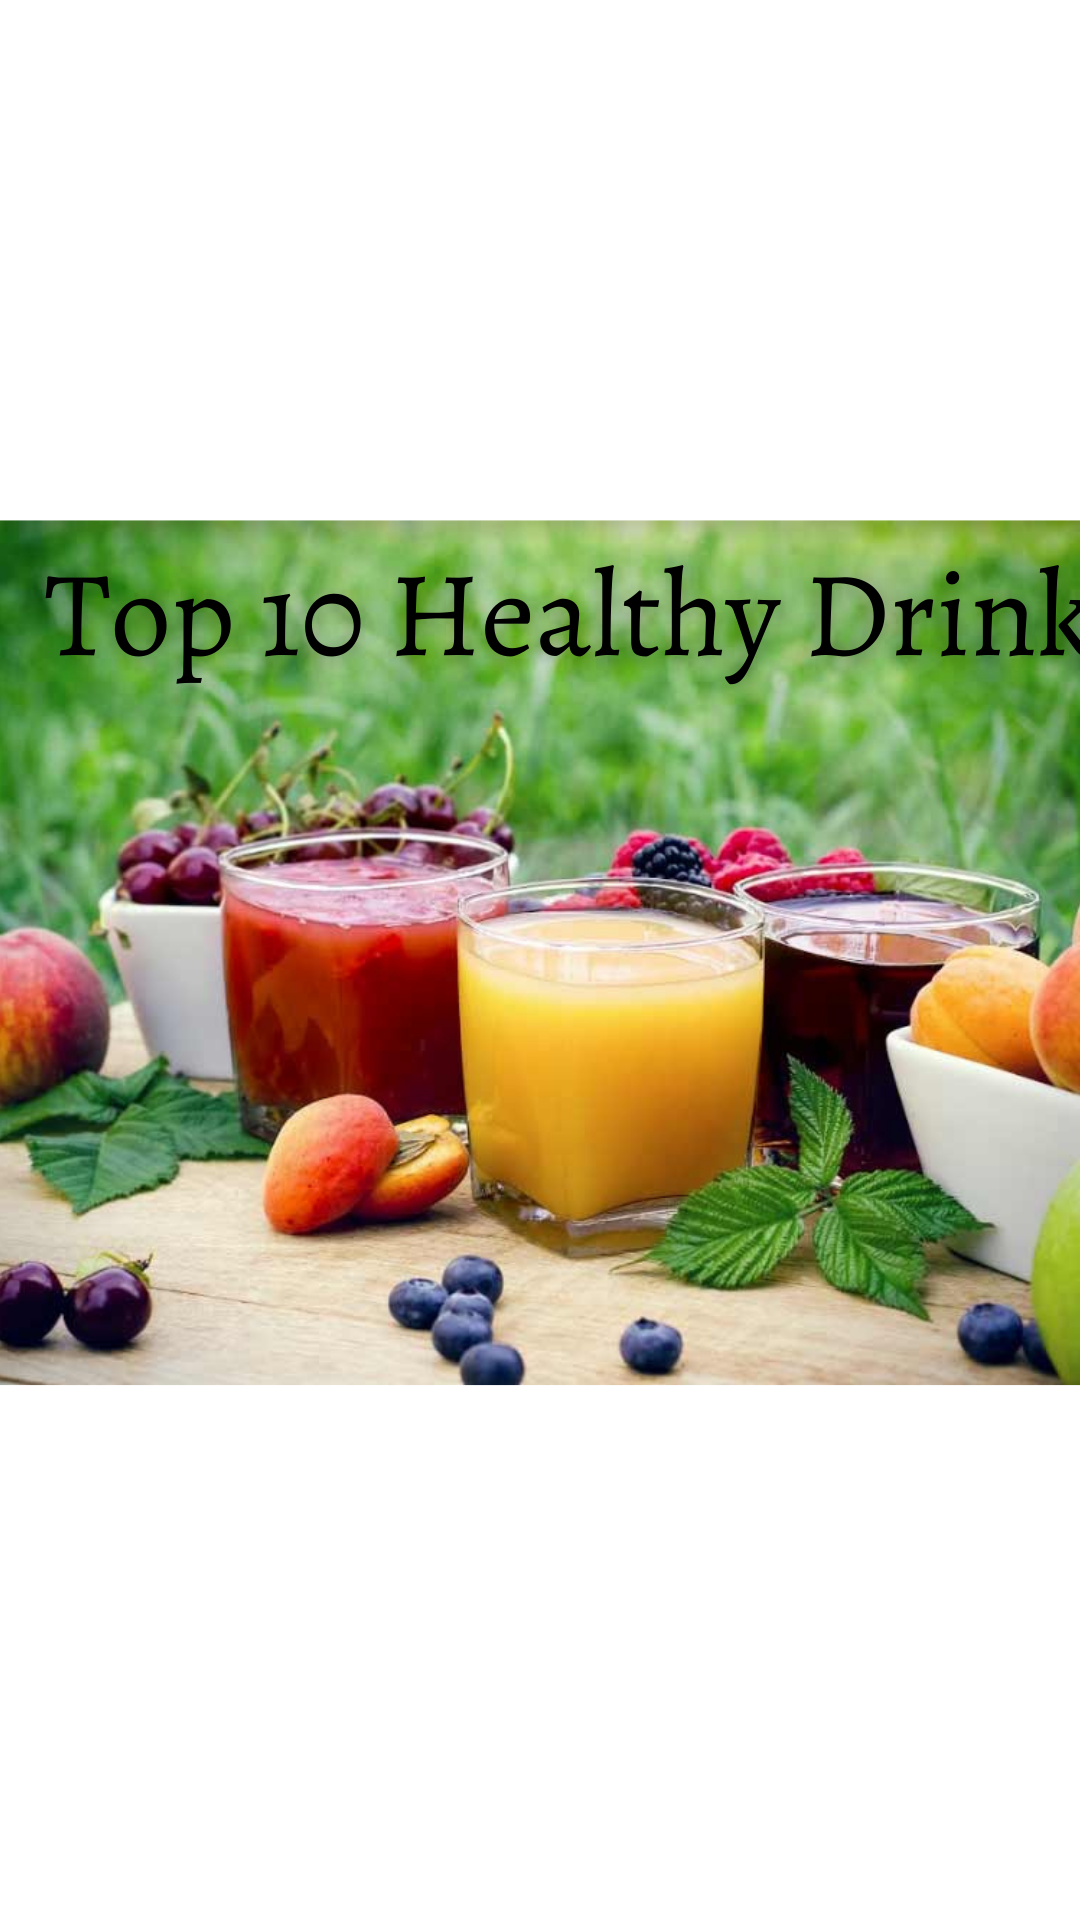 Top 10 healthy drinks